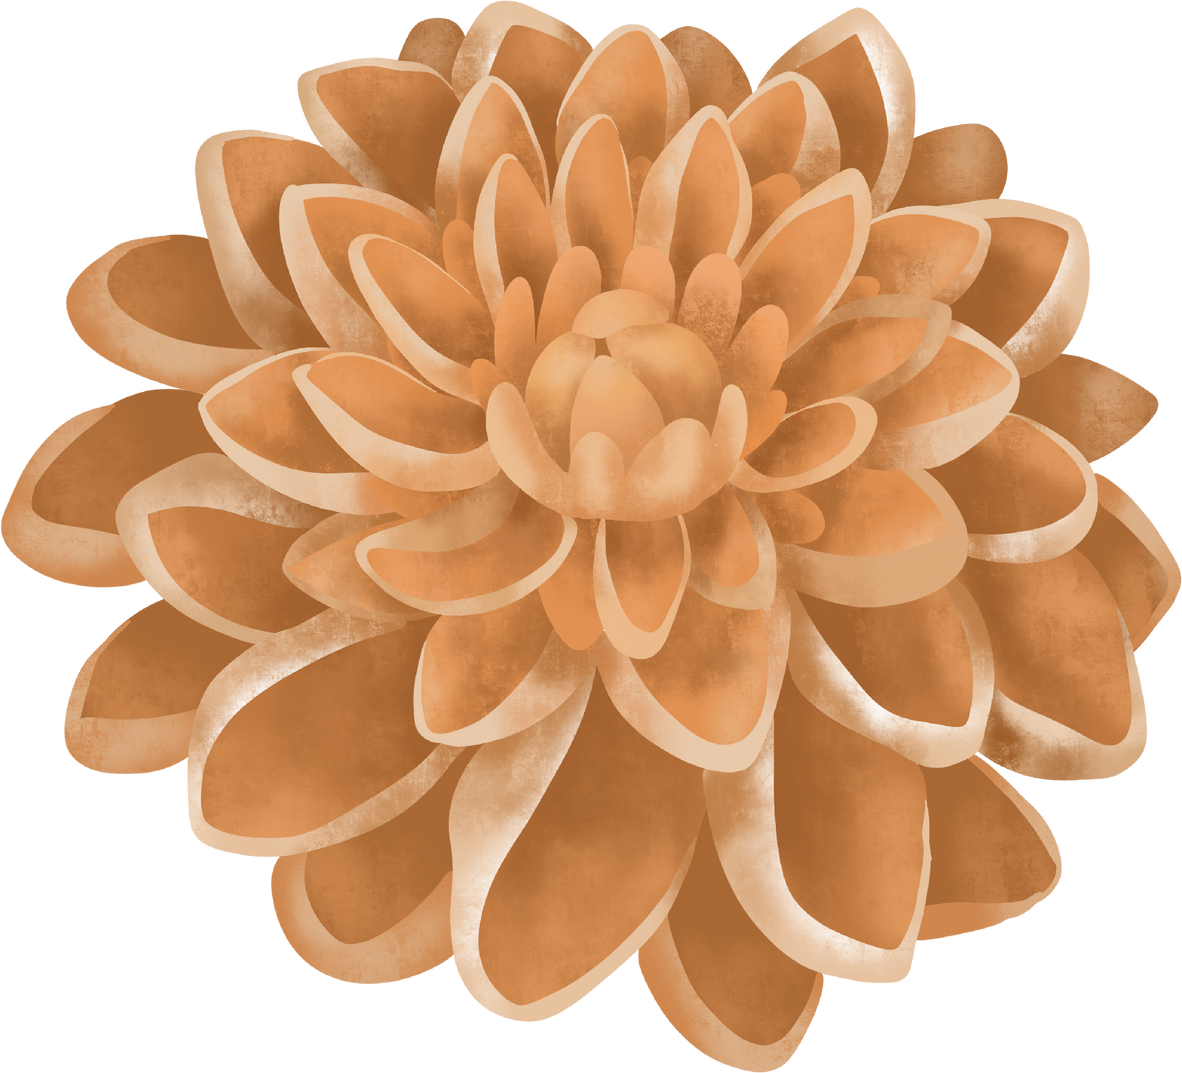 Chrysanthemum Flower Illustration